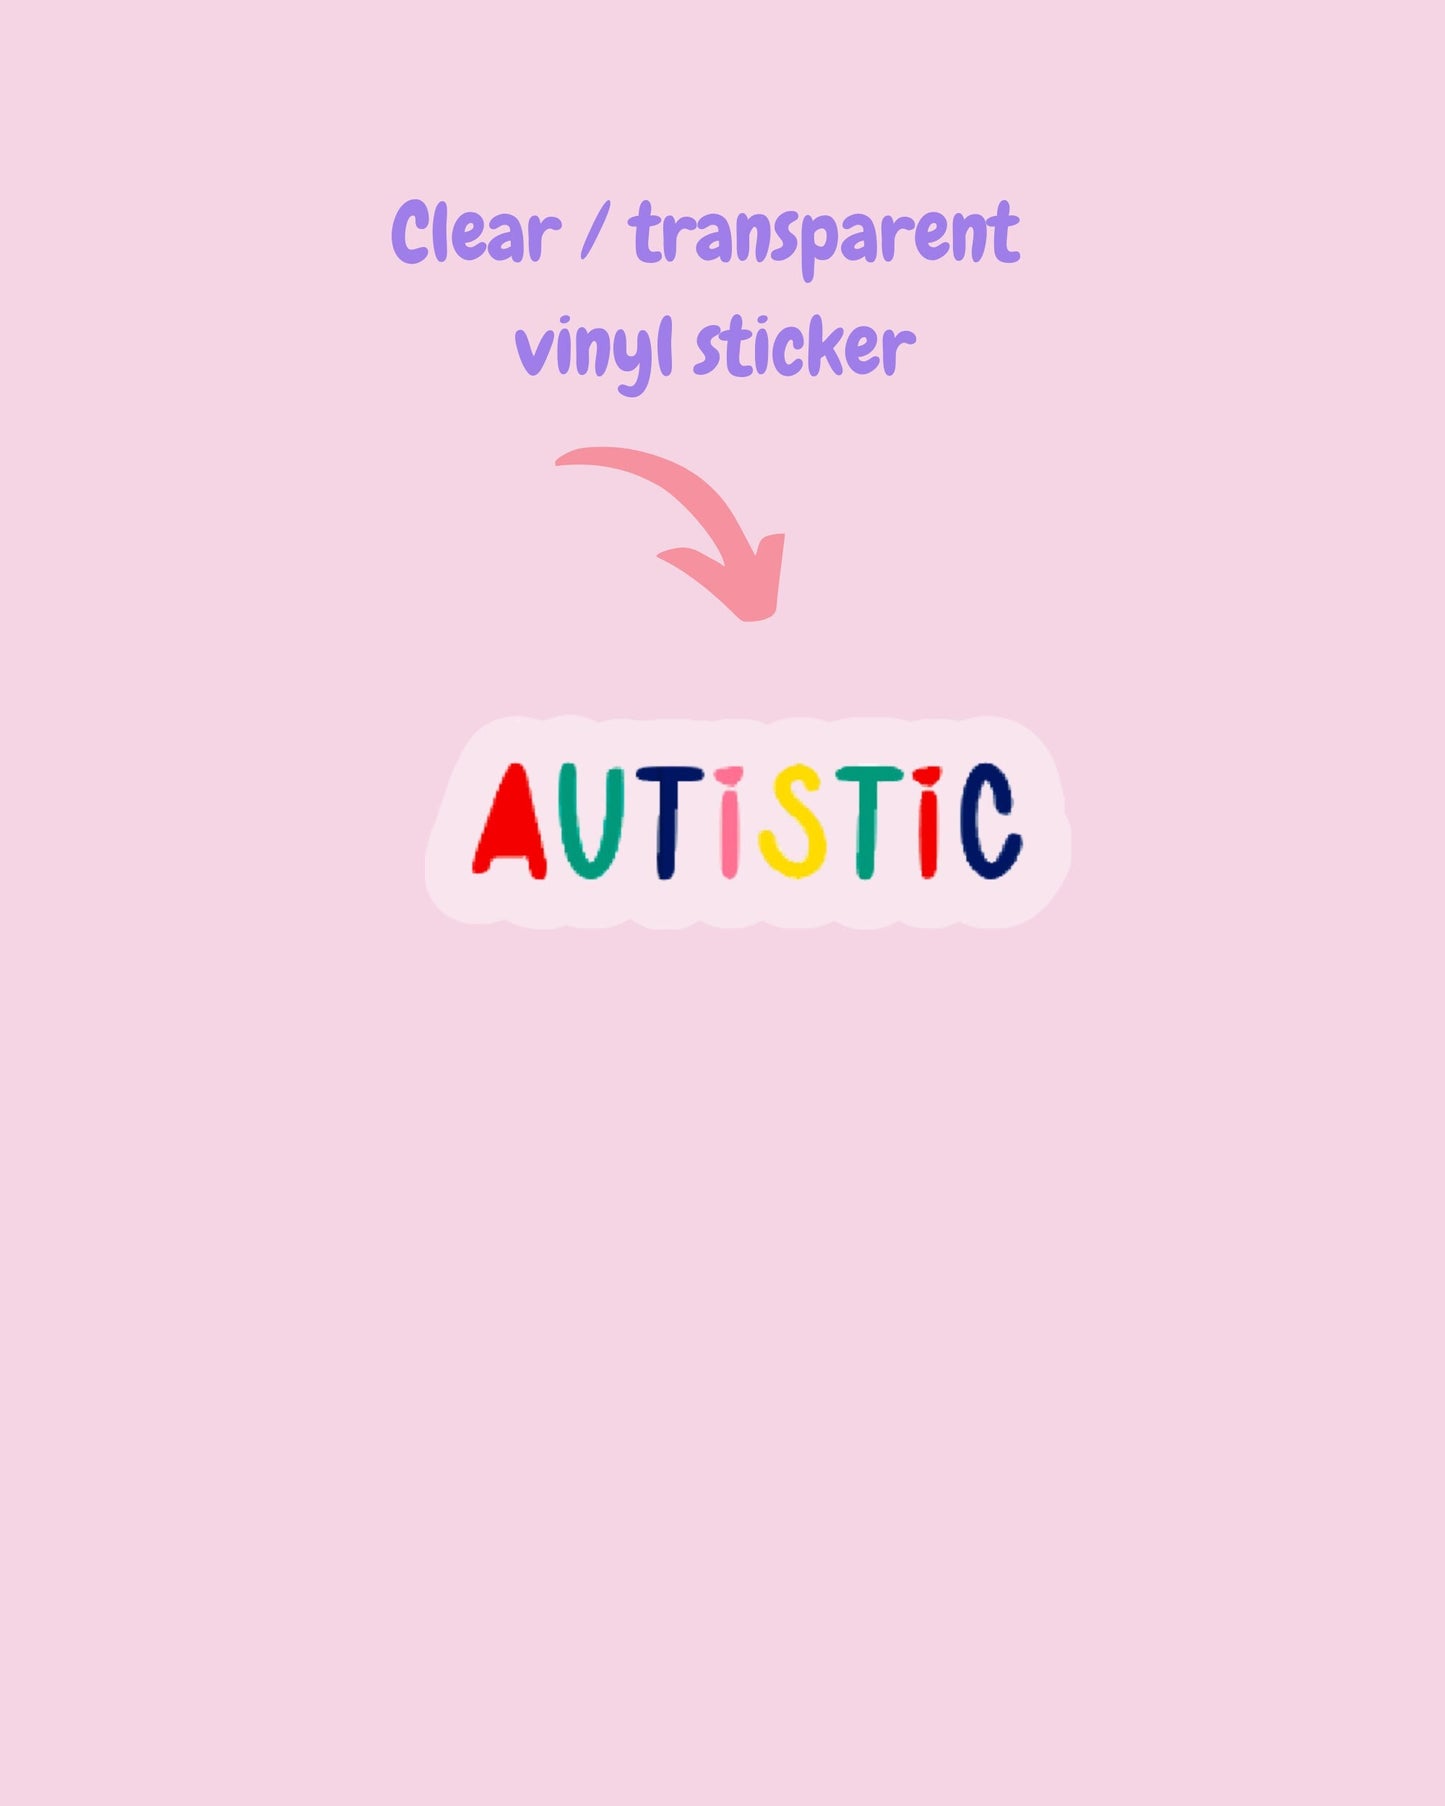 Autistic clear vinyl sticker